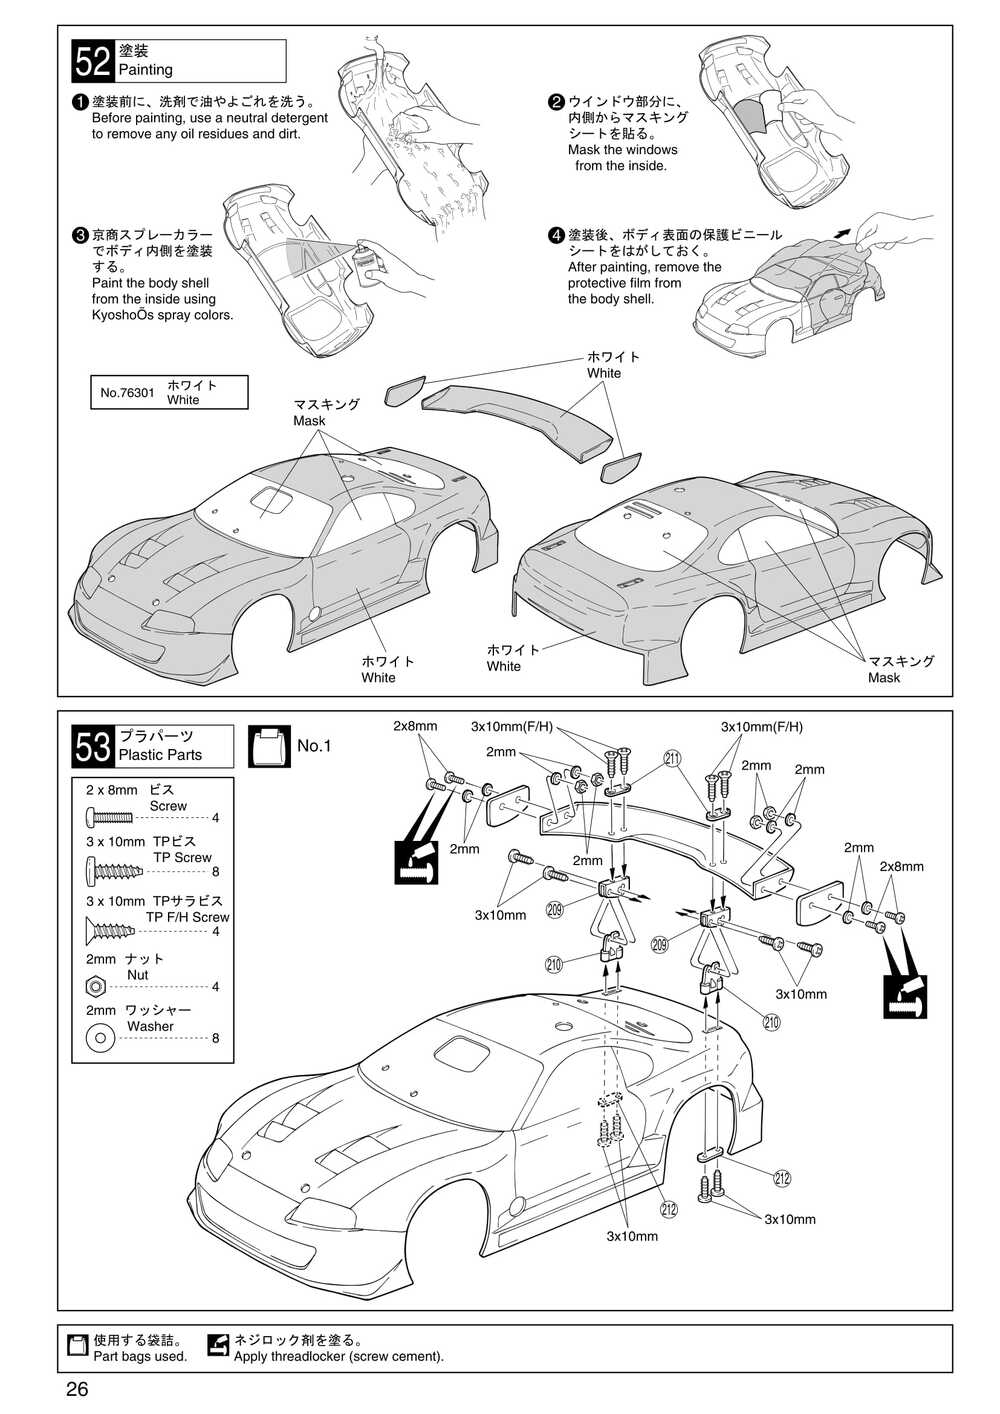 Kyosho - 31041 - Fantom Sports - Manual - Page 26